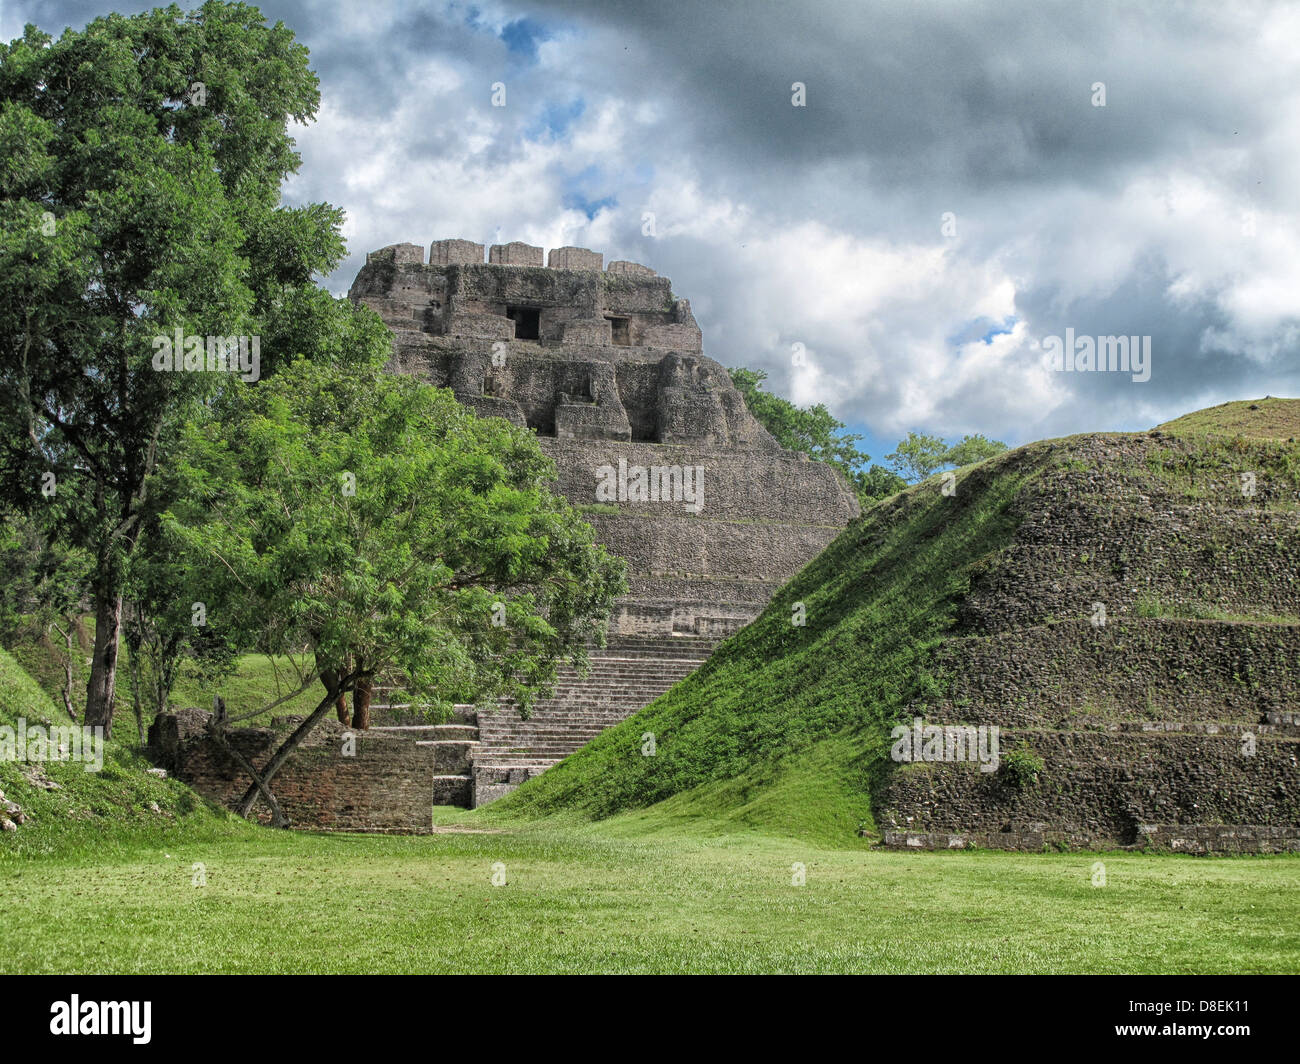 peru ancient remains landscape historic history Stock Photo